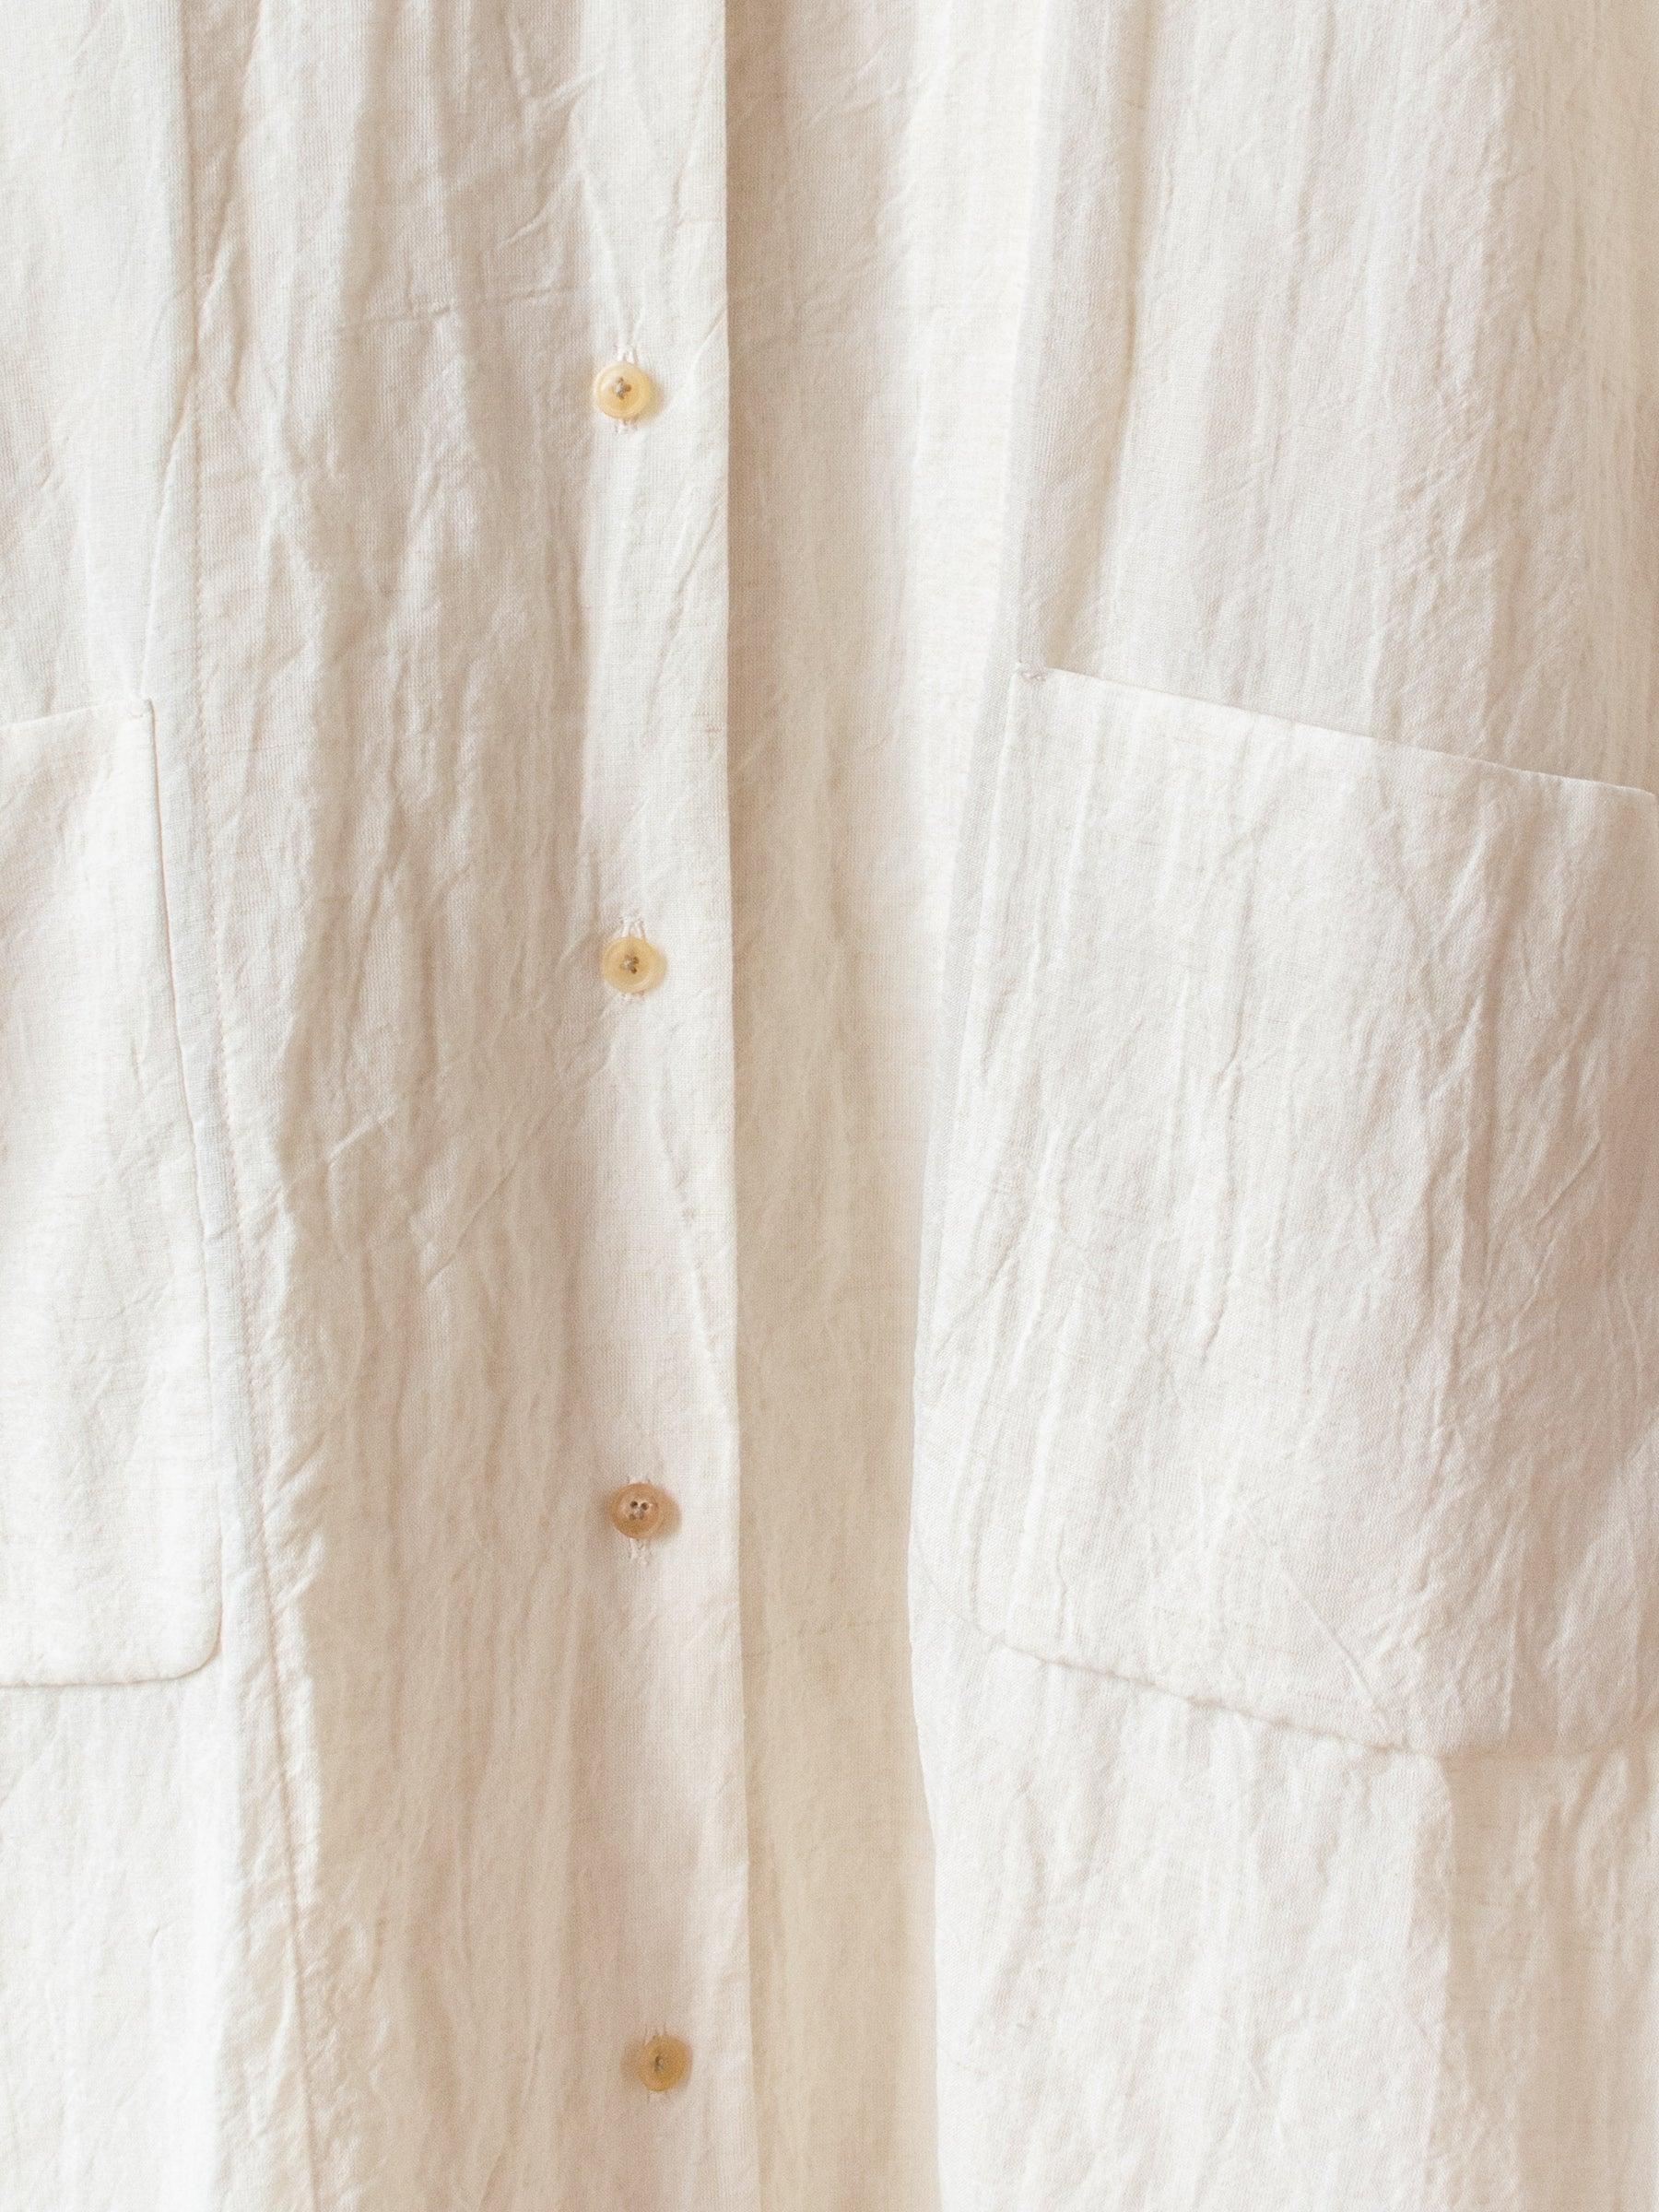 Namu Shop - Phlannel Cotton Linen Voile Open Collared Dress - Ivory